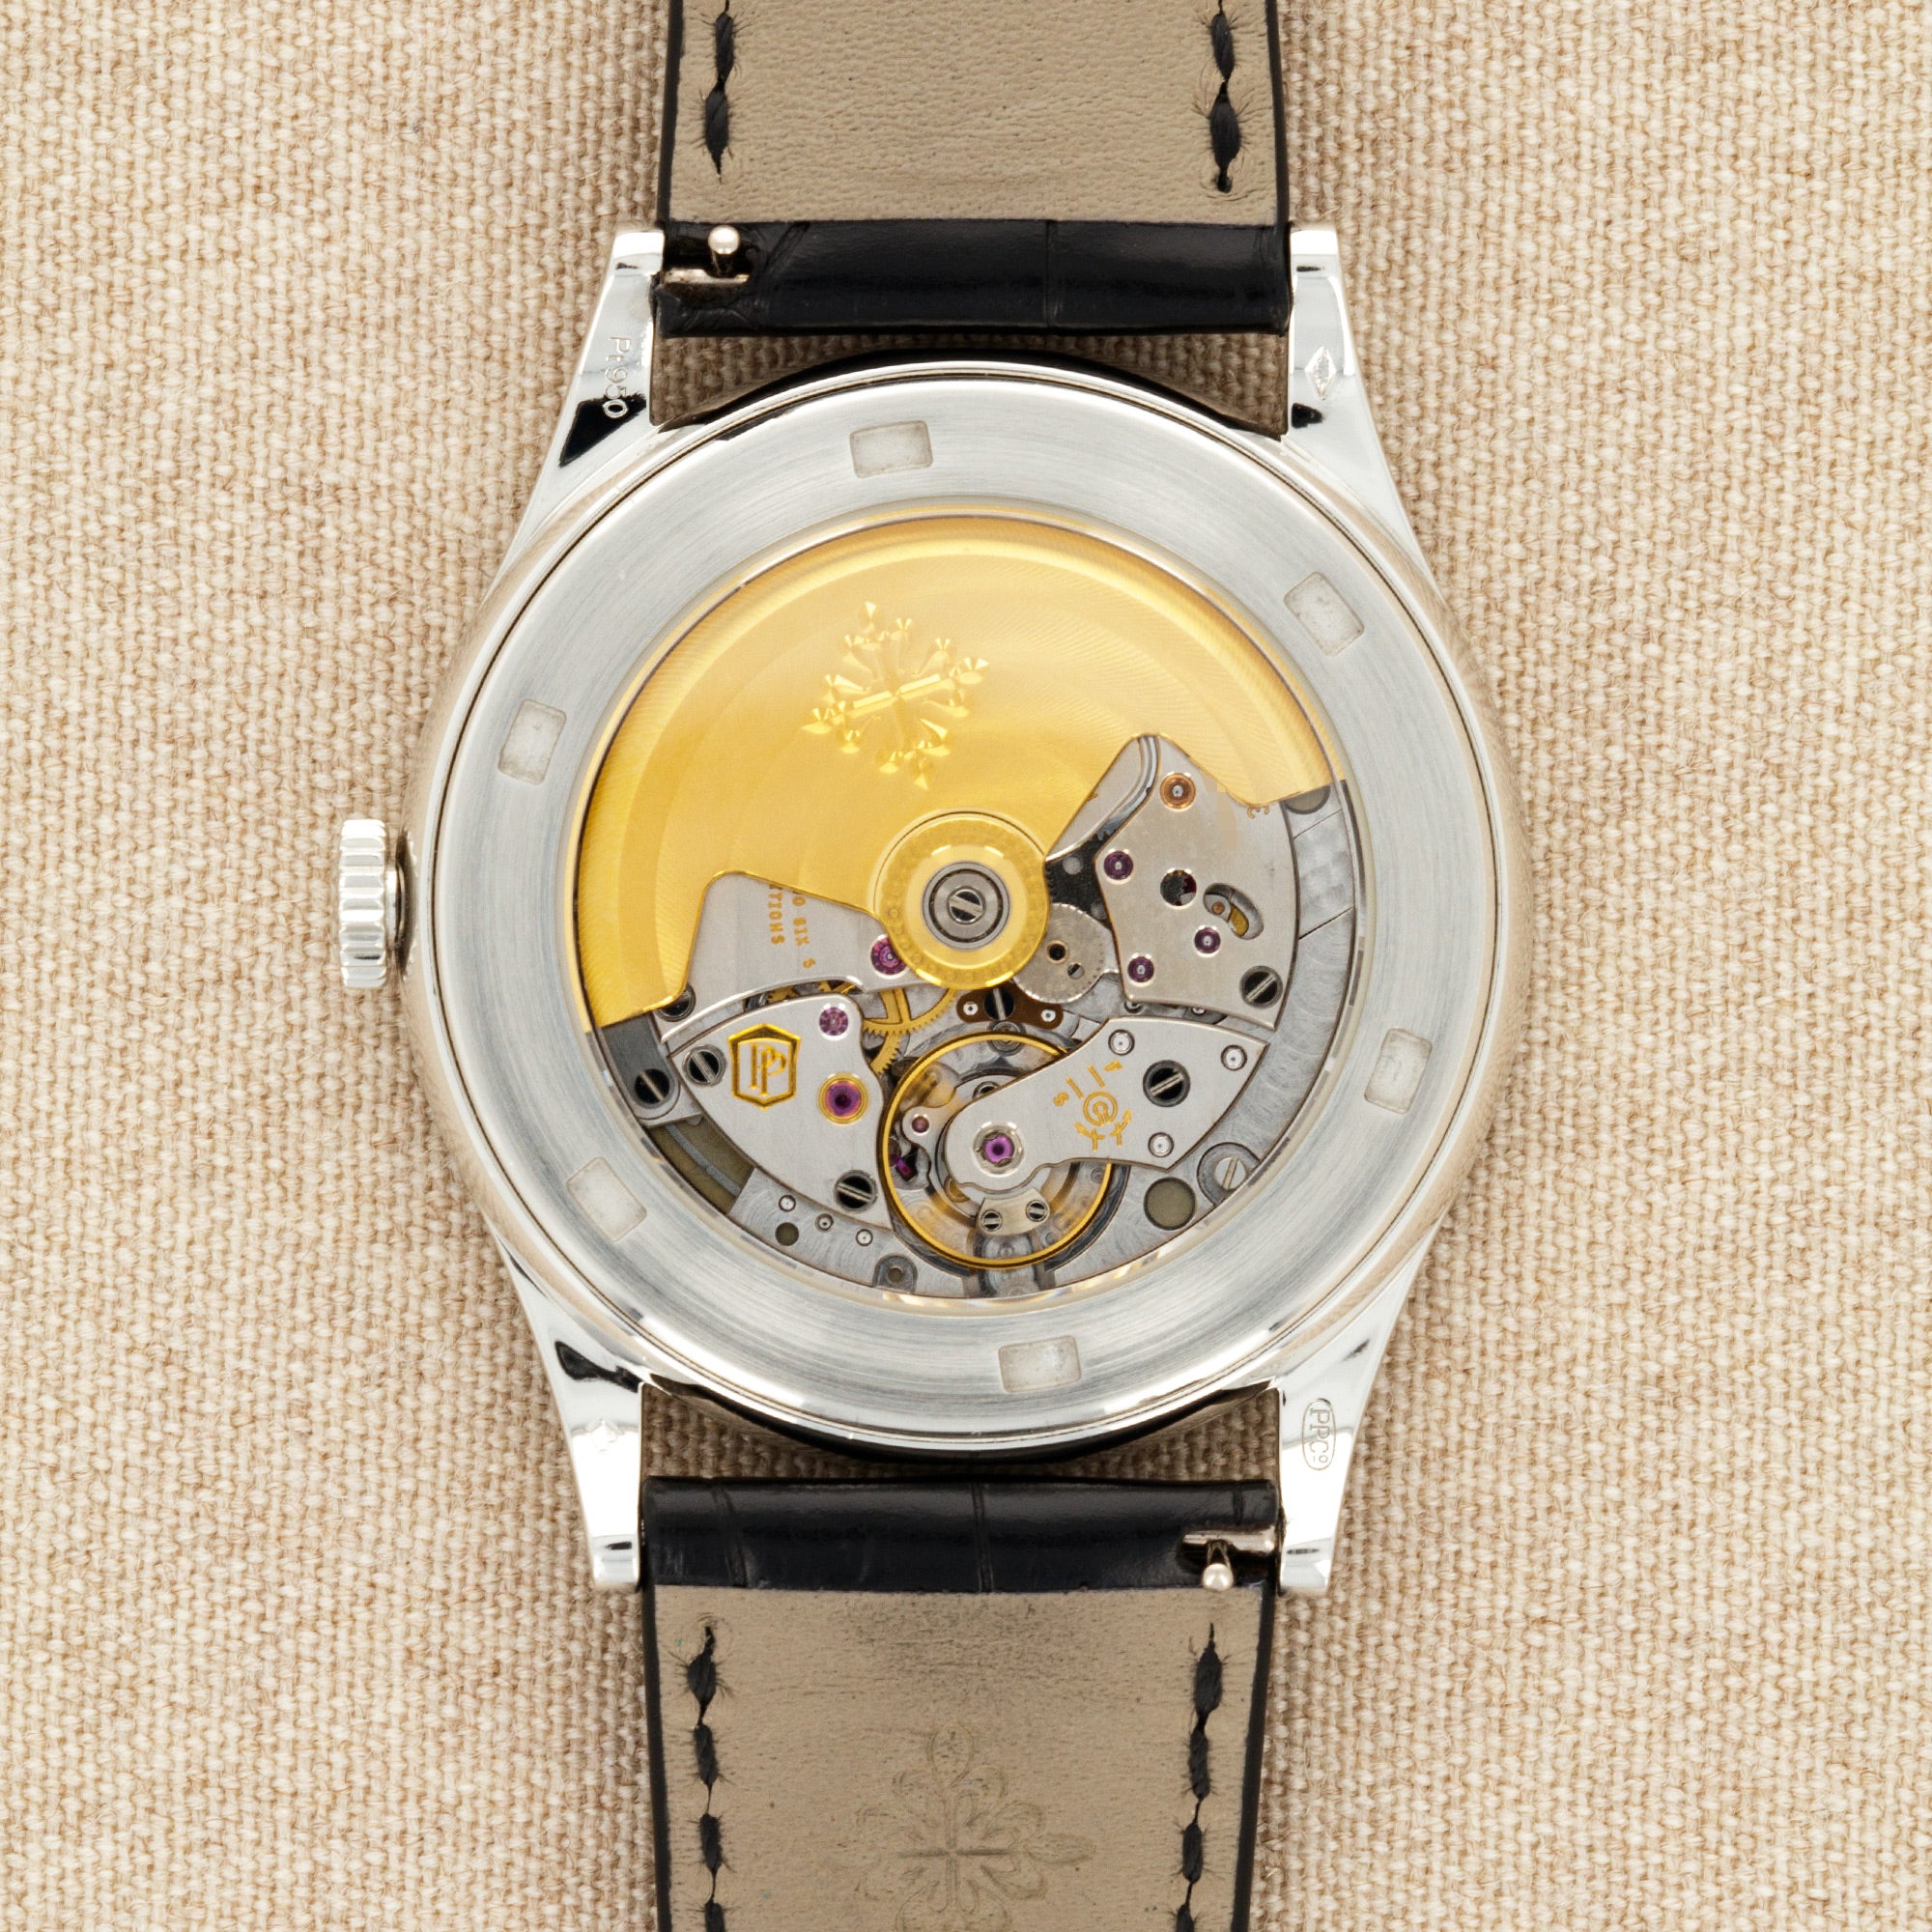 Patek Philippe - Patek Philippe Platinum Calatrava Watch Ref. 5298 with Baguette Diamonds - The Keystone Watches